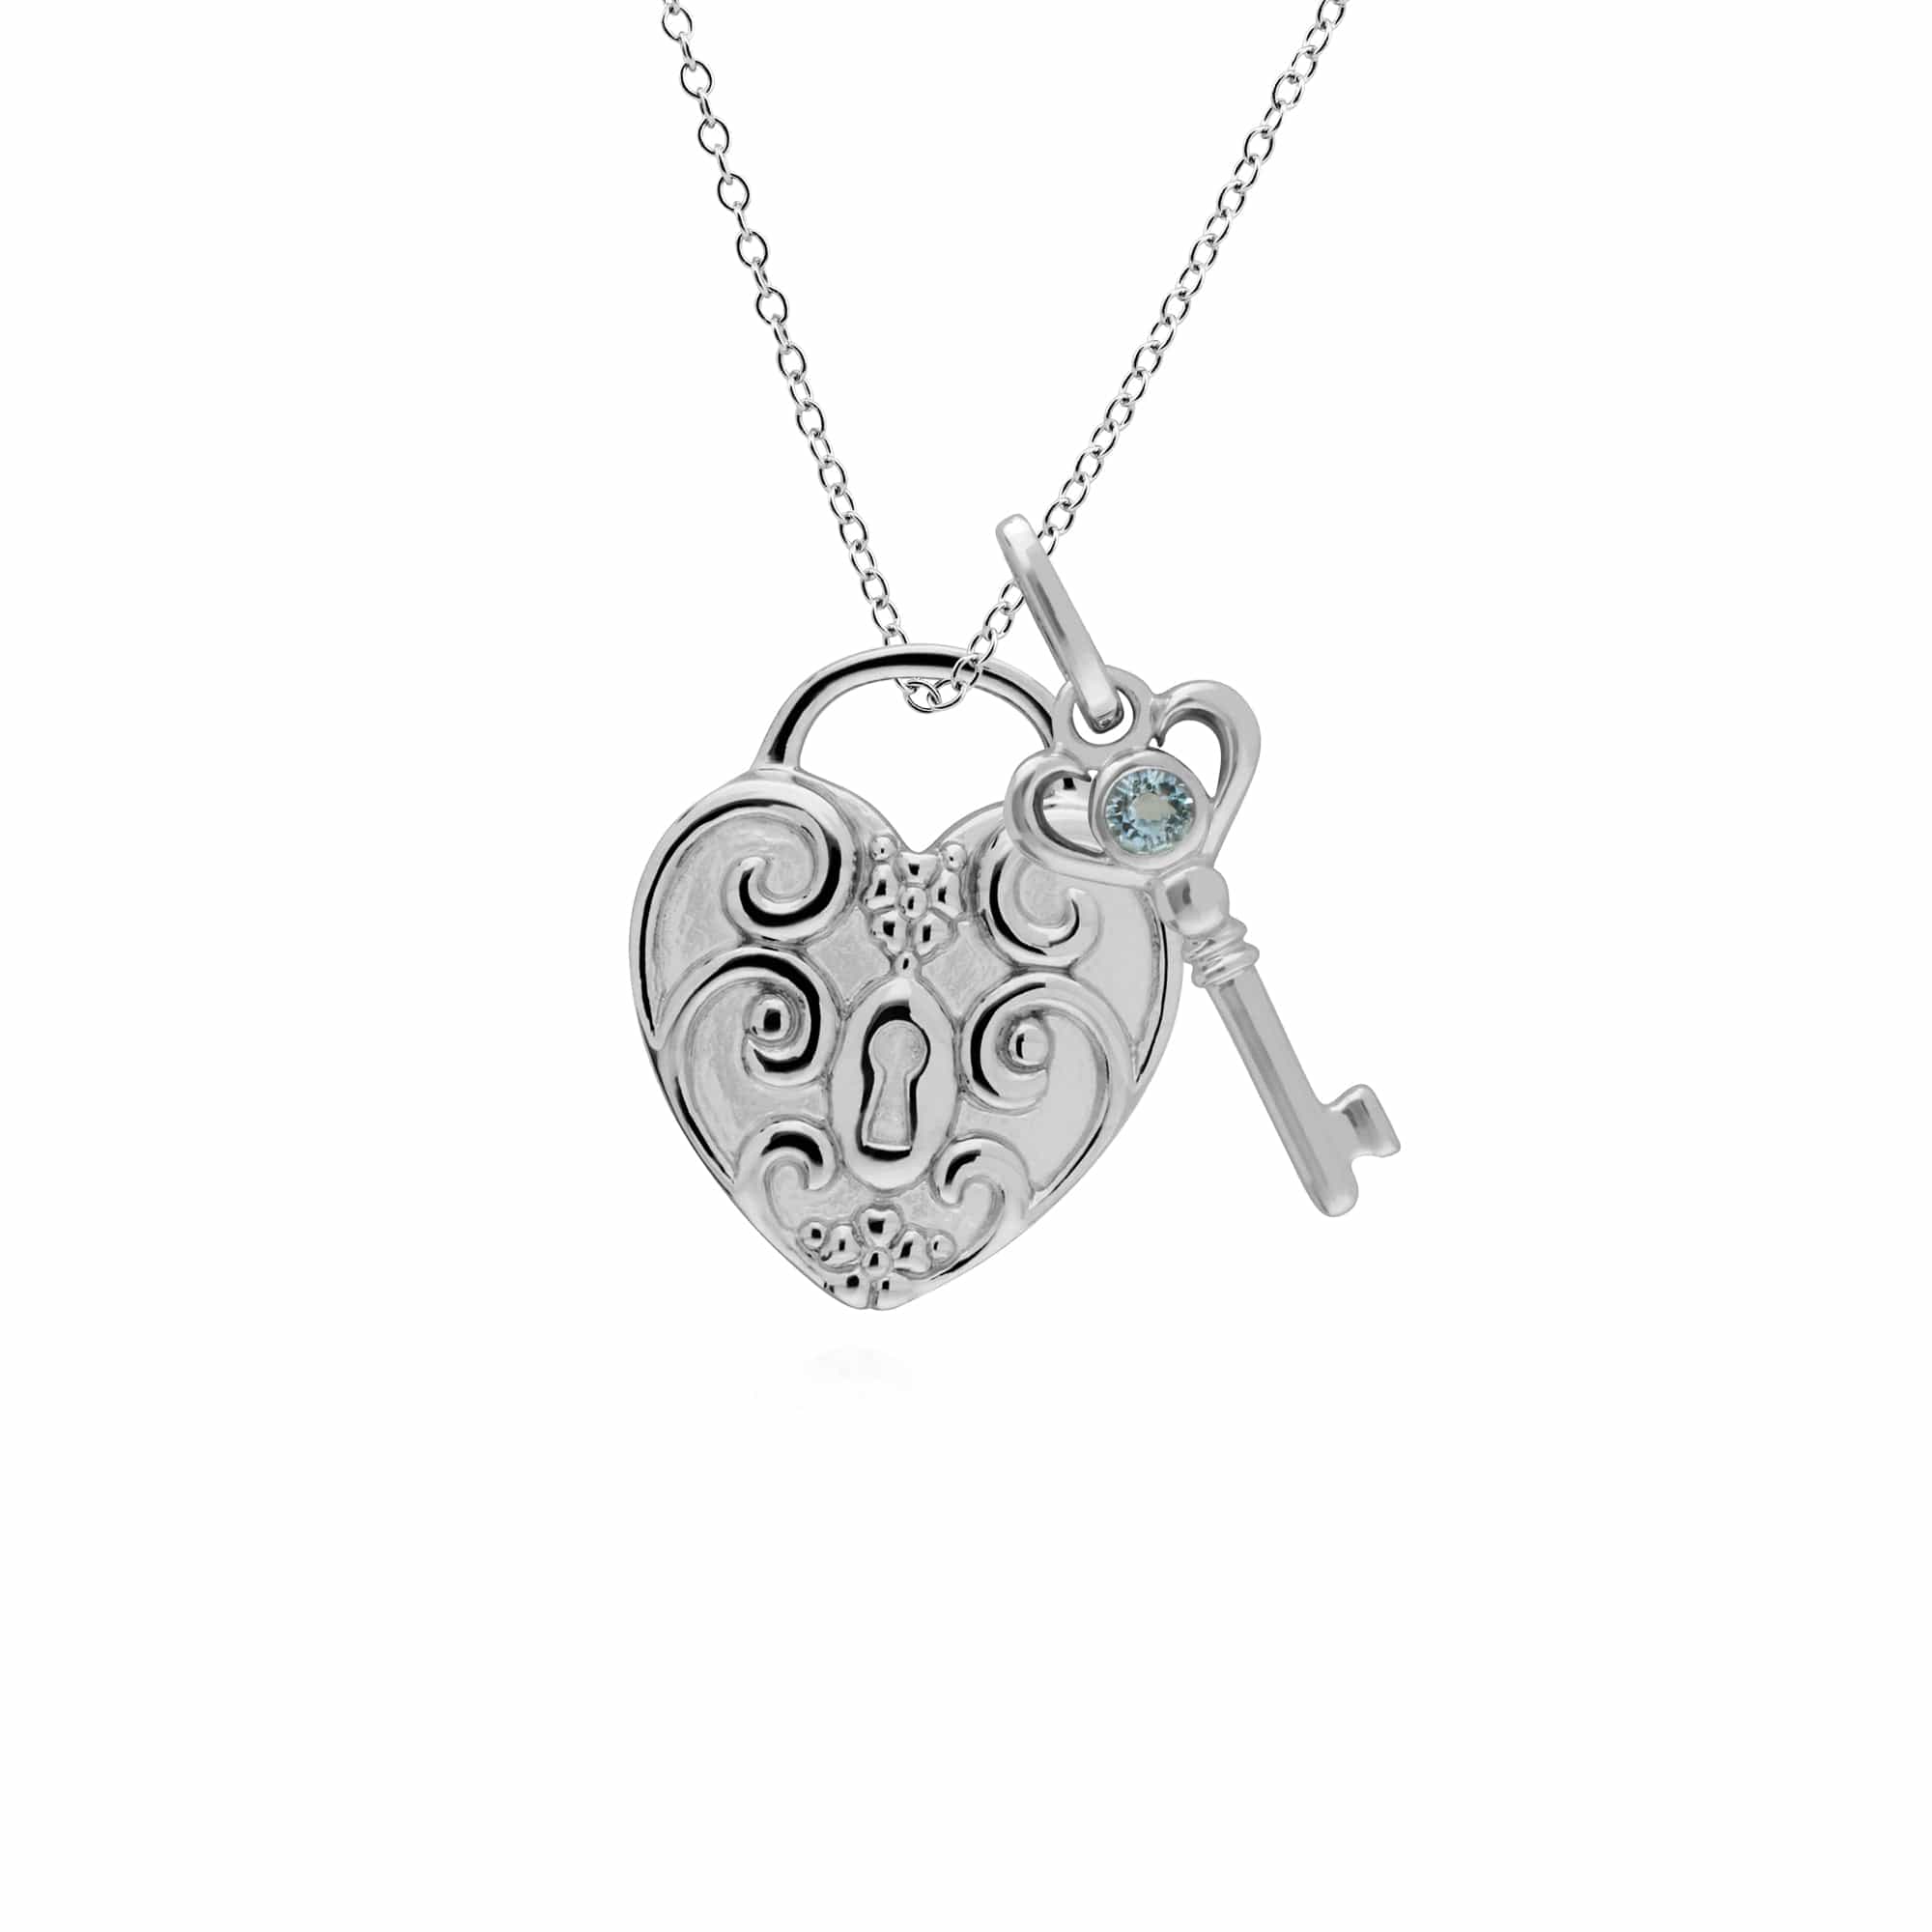 270P026408925-270P026601925 Classic Swirl Heart Lock Pendant & Aquamarine Key Charm in 925 Sterling Silver 1